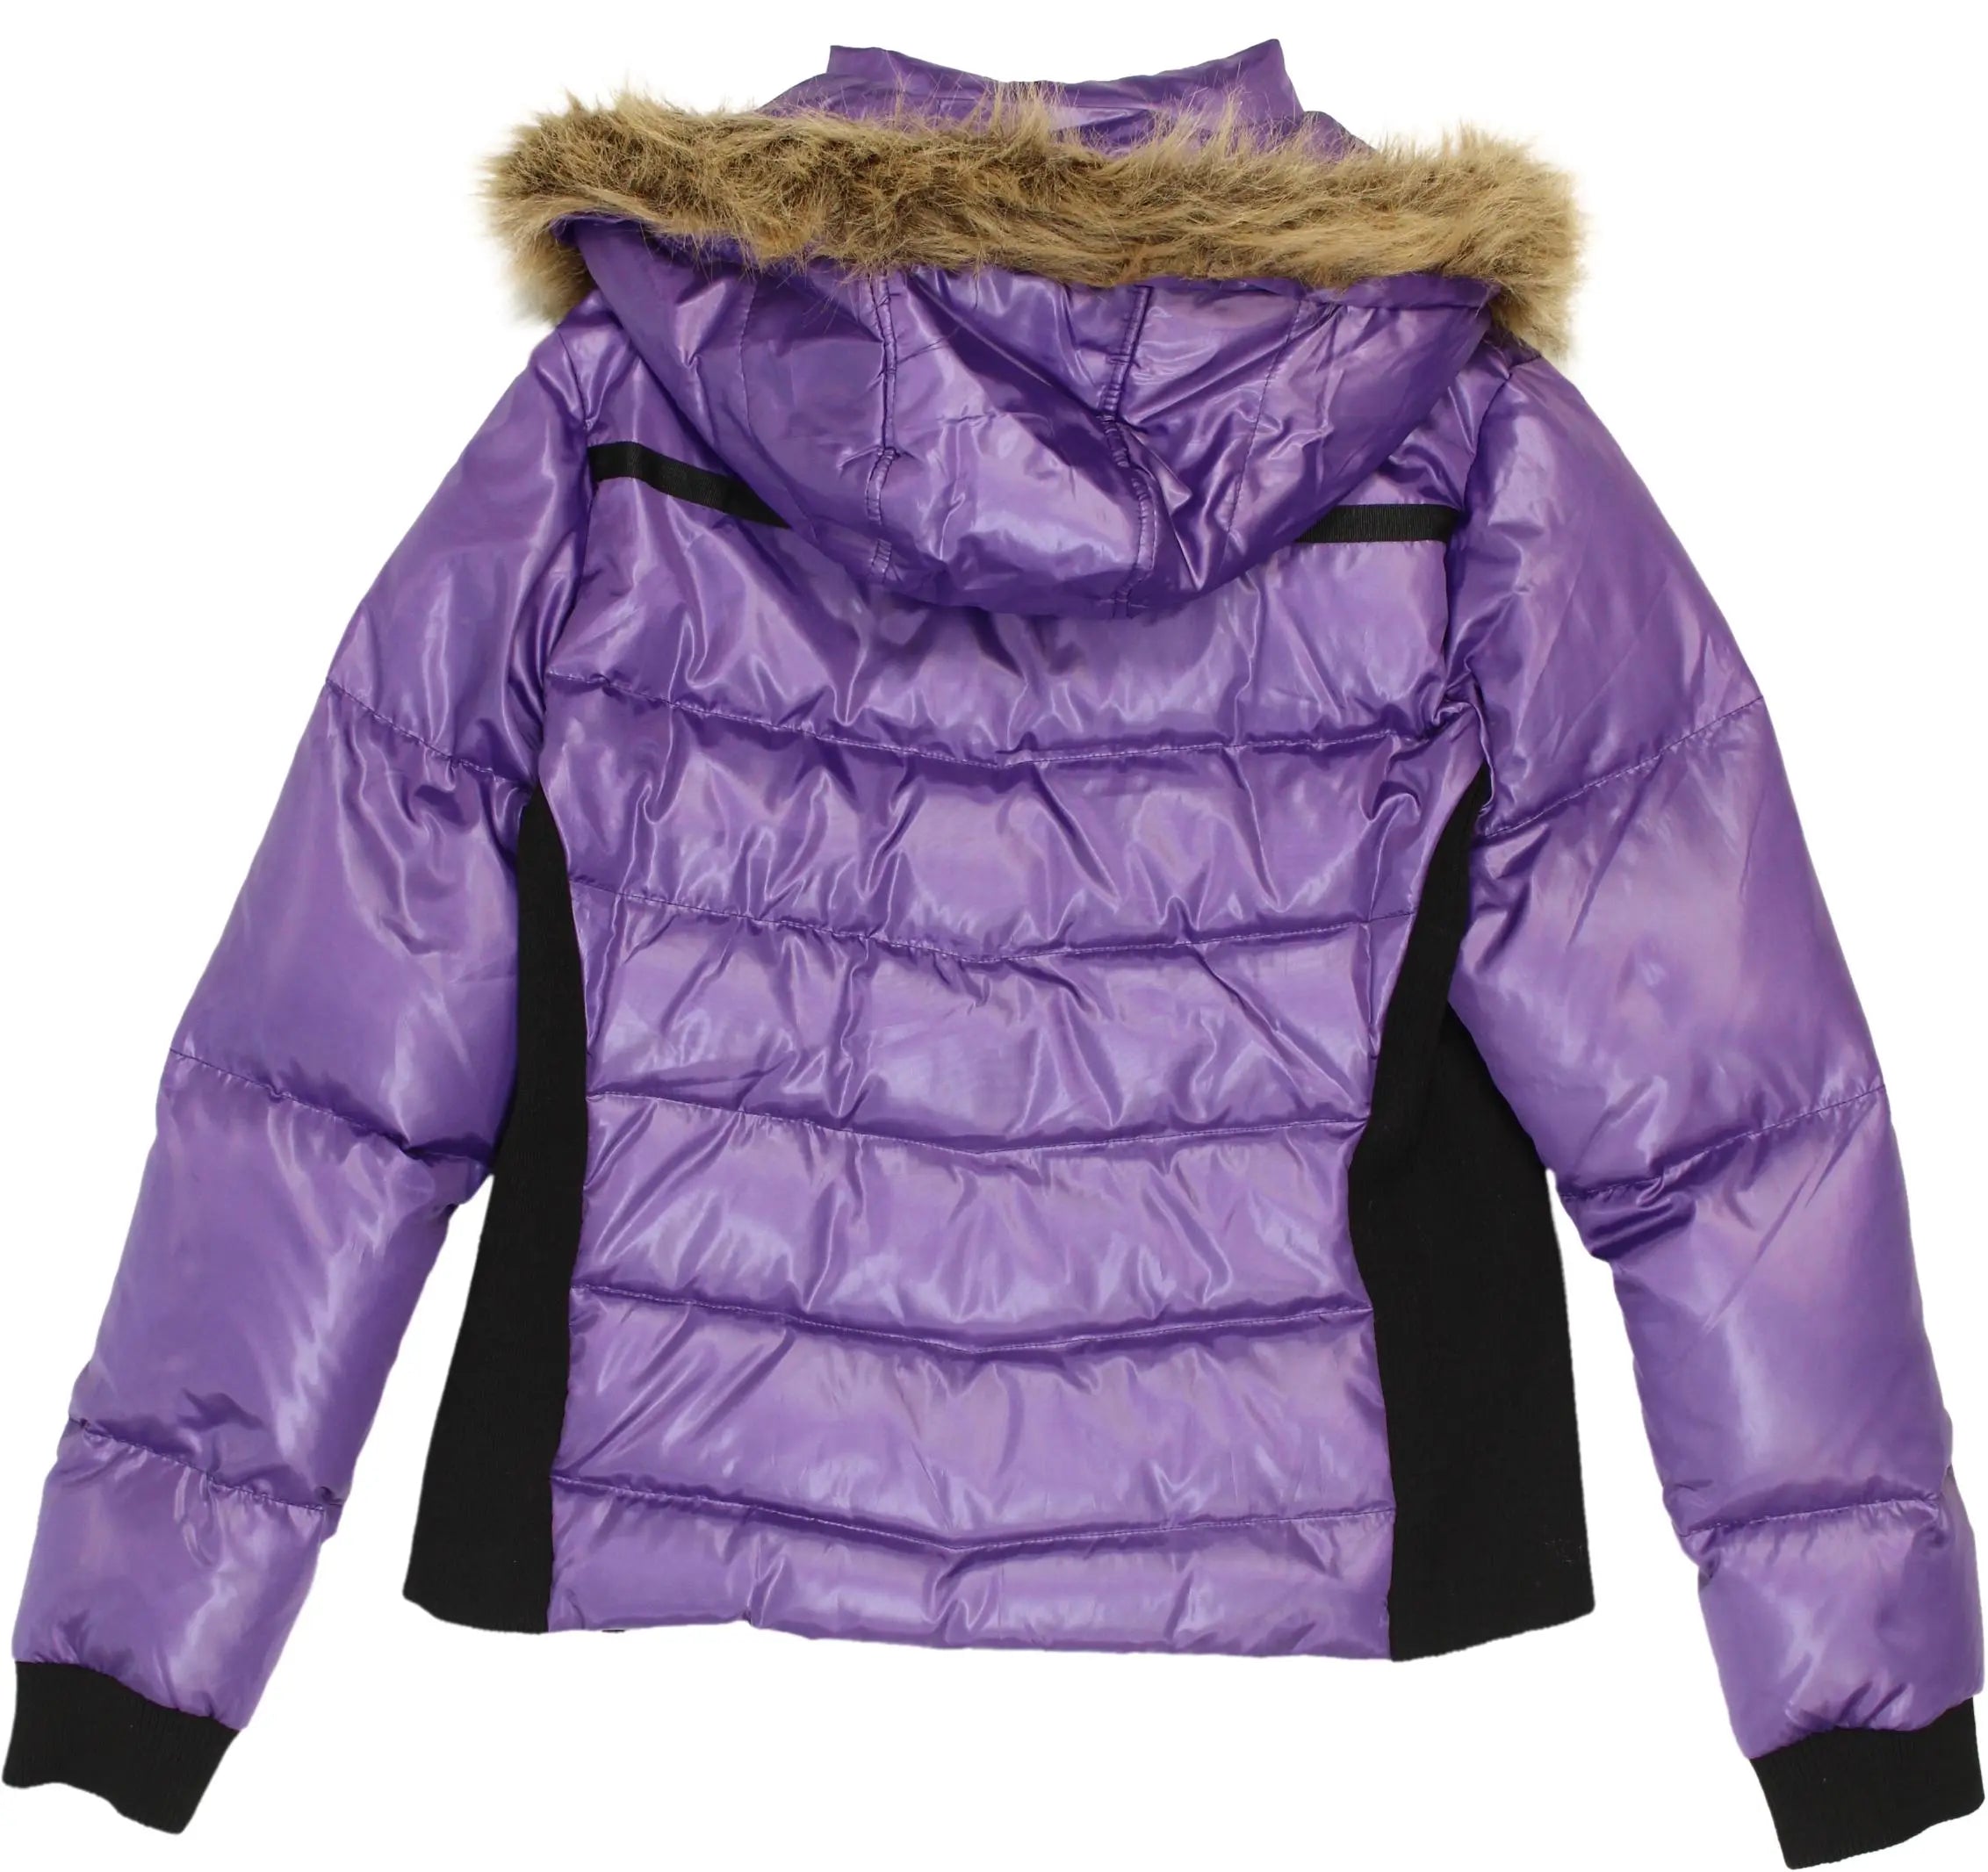 Blendshe - Purple Jacket- ThriftTale.com - Vintage and second handclothing